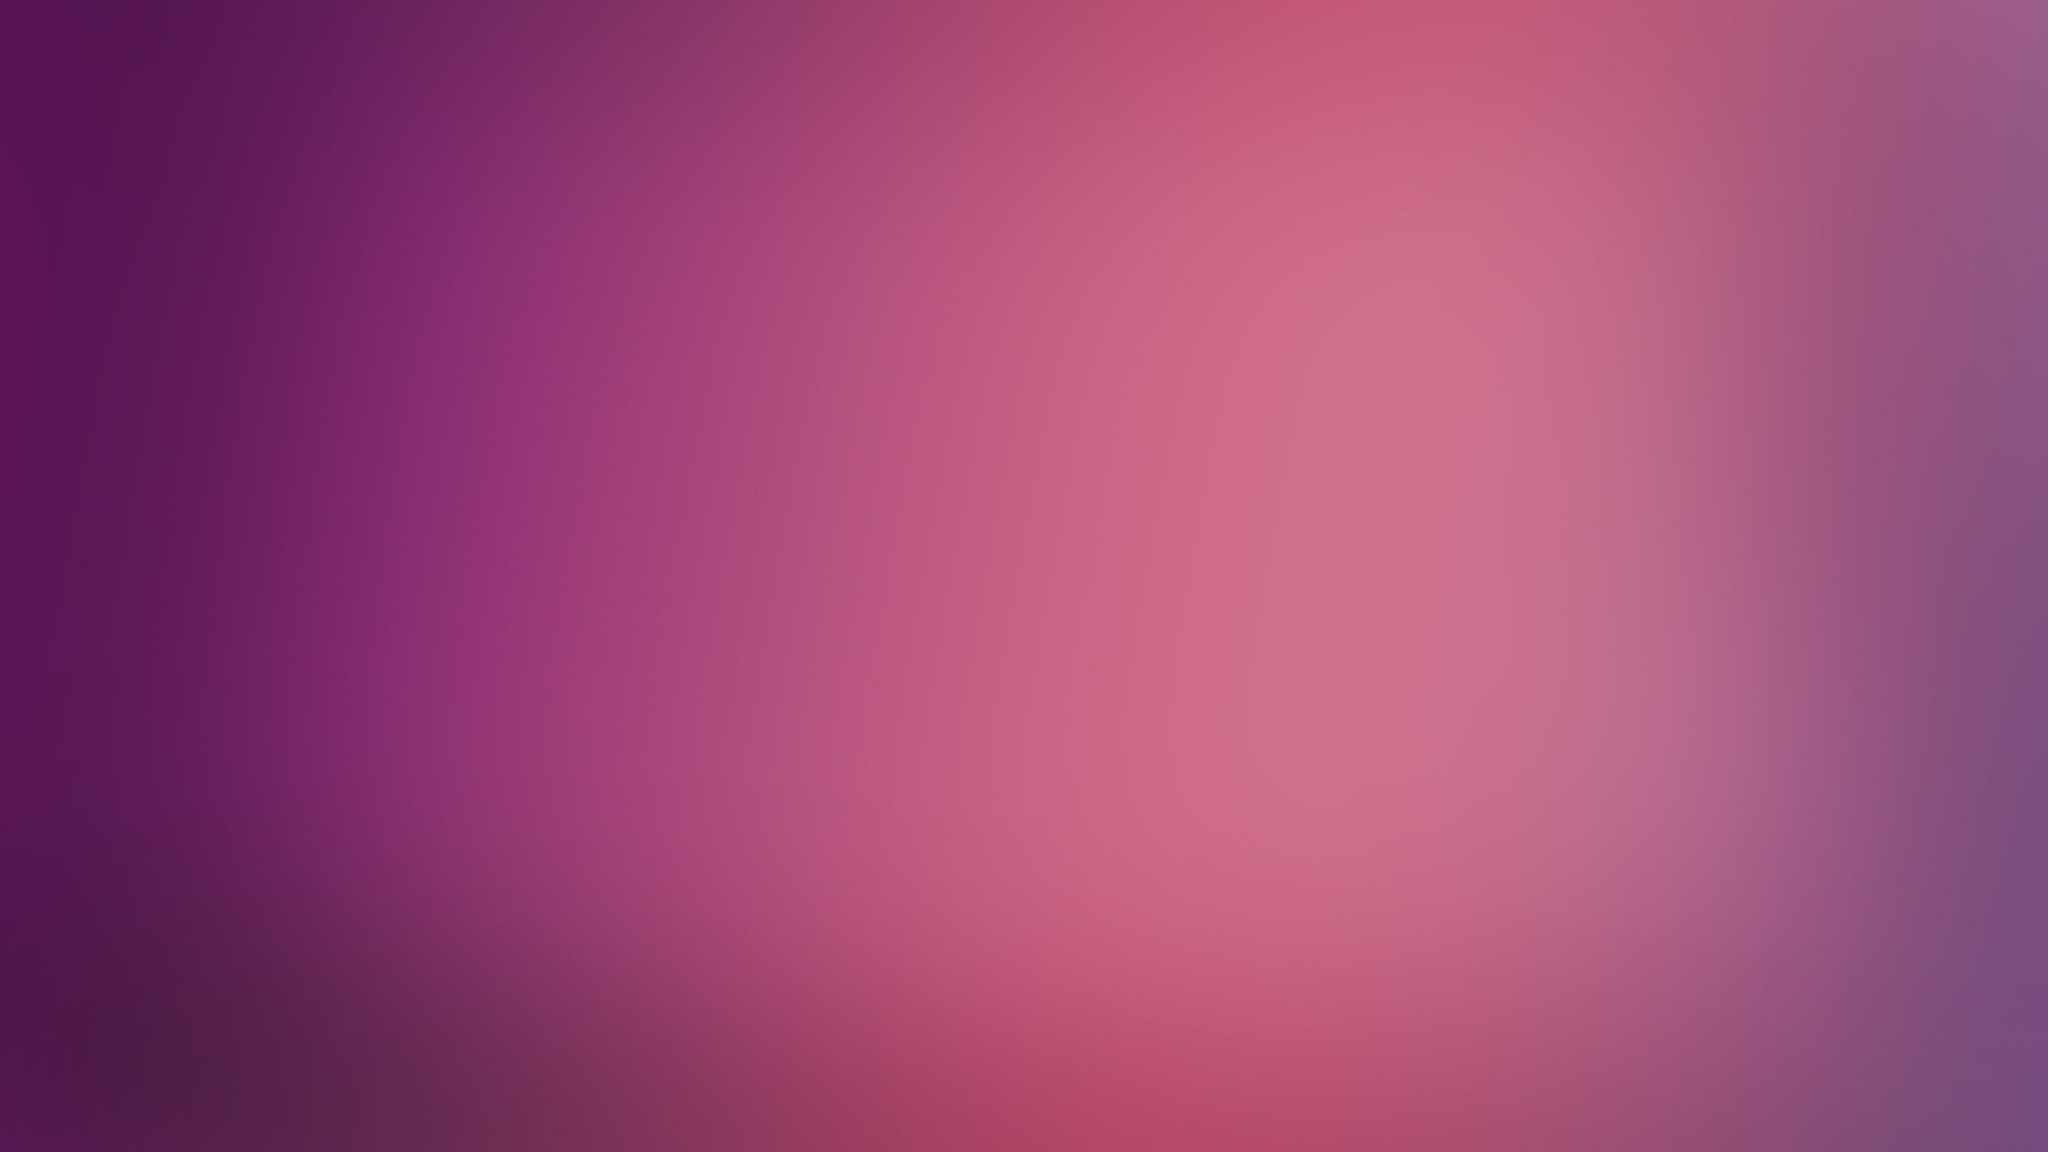 2048x1152 Light Pink Solid Color Background Hot Pink Solid Color Background ...